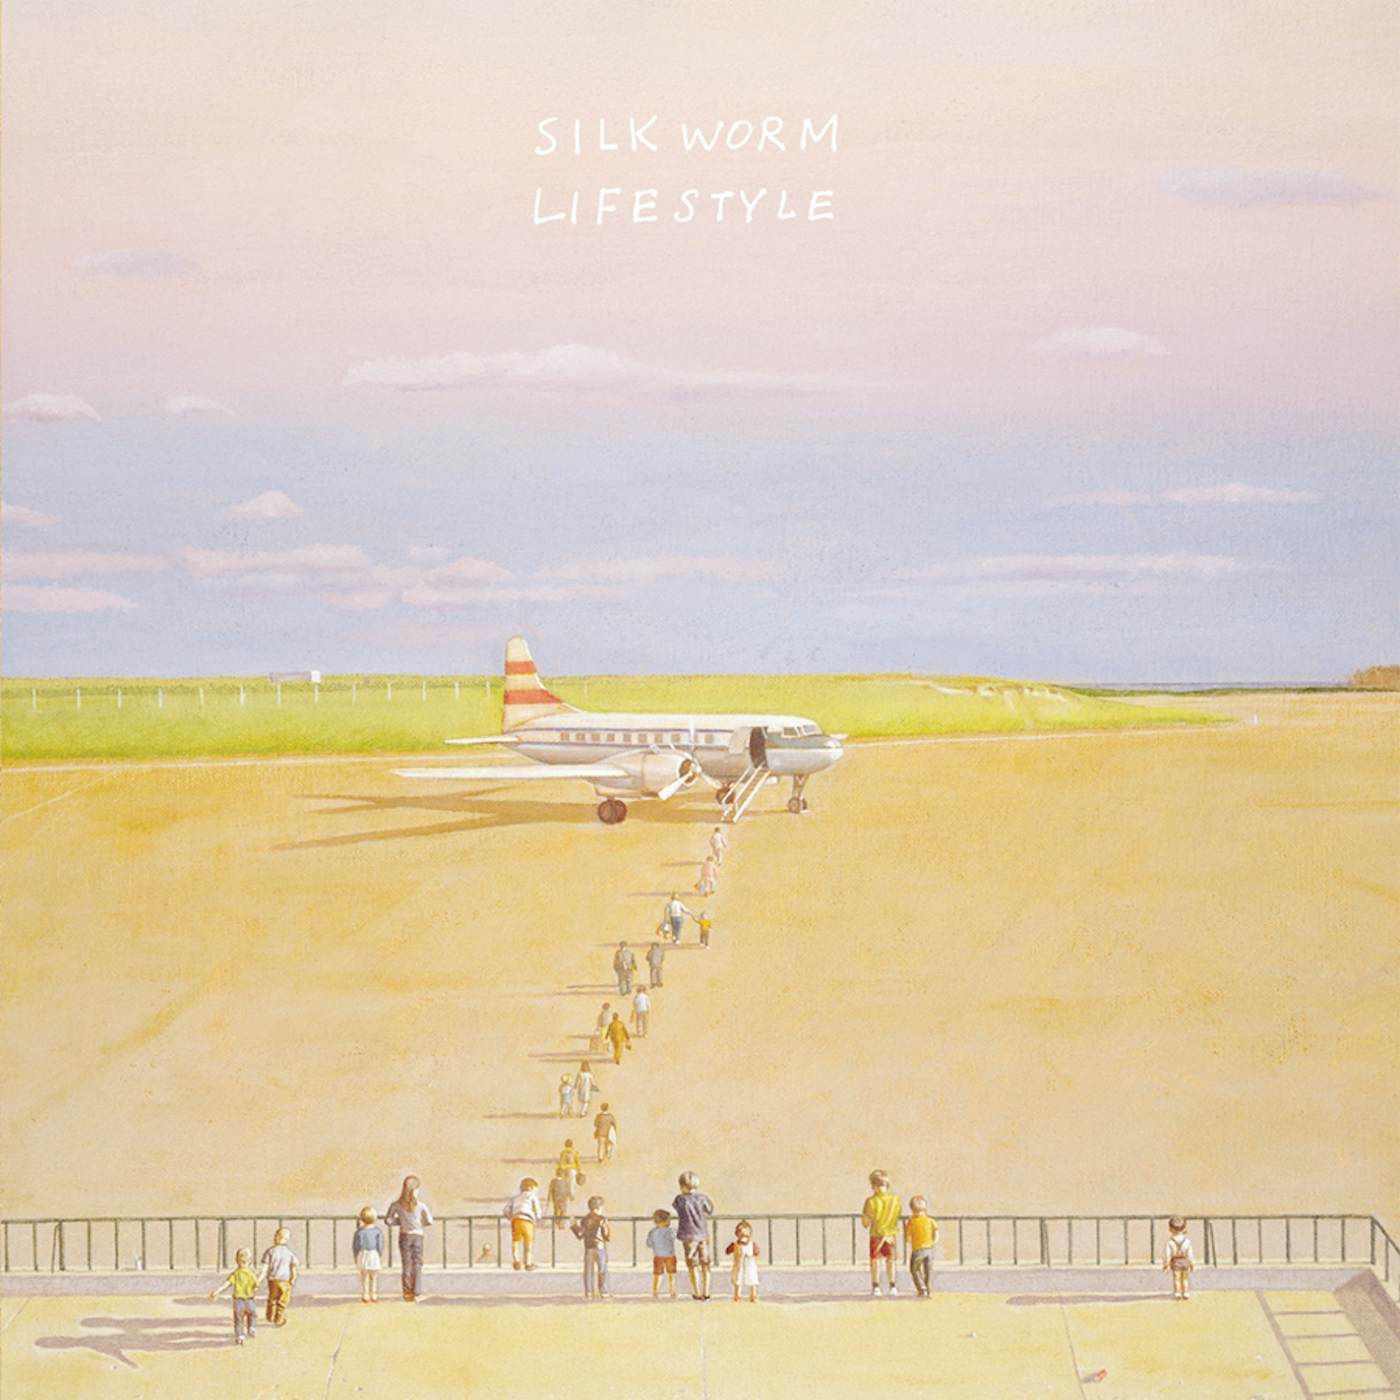 Silkworm Lifestyle Vinyl Record